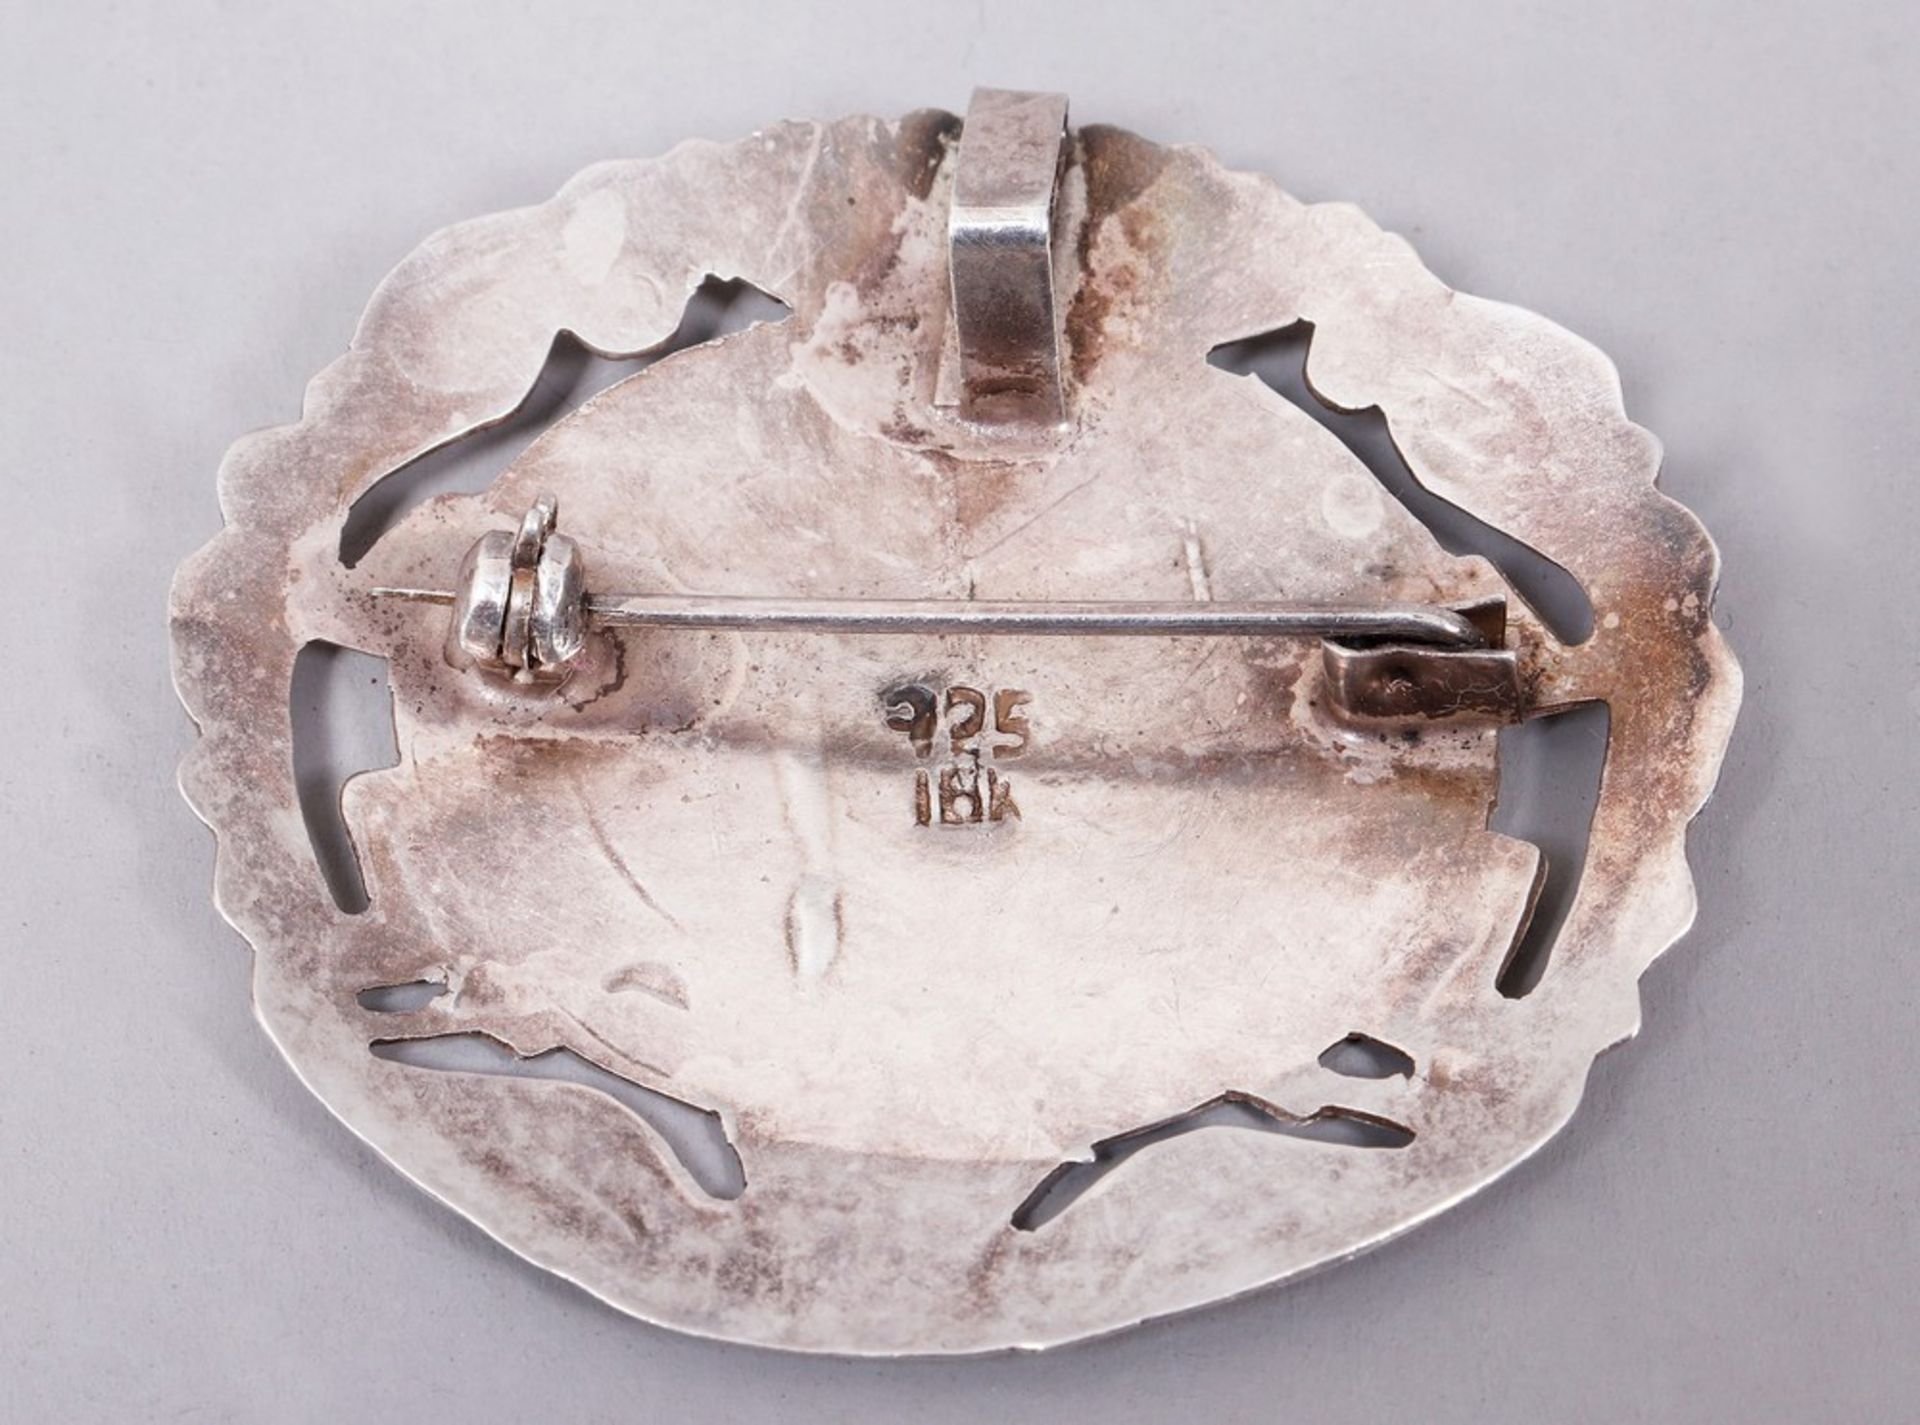 Brooch/pendant, 925 silver/750 gold, Peru, 20th C. - Image 3 of 3